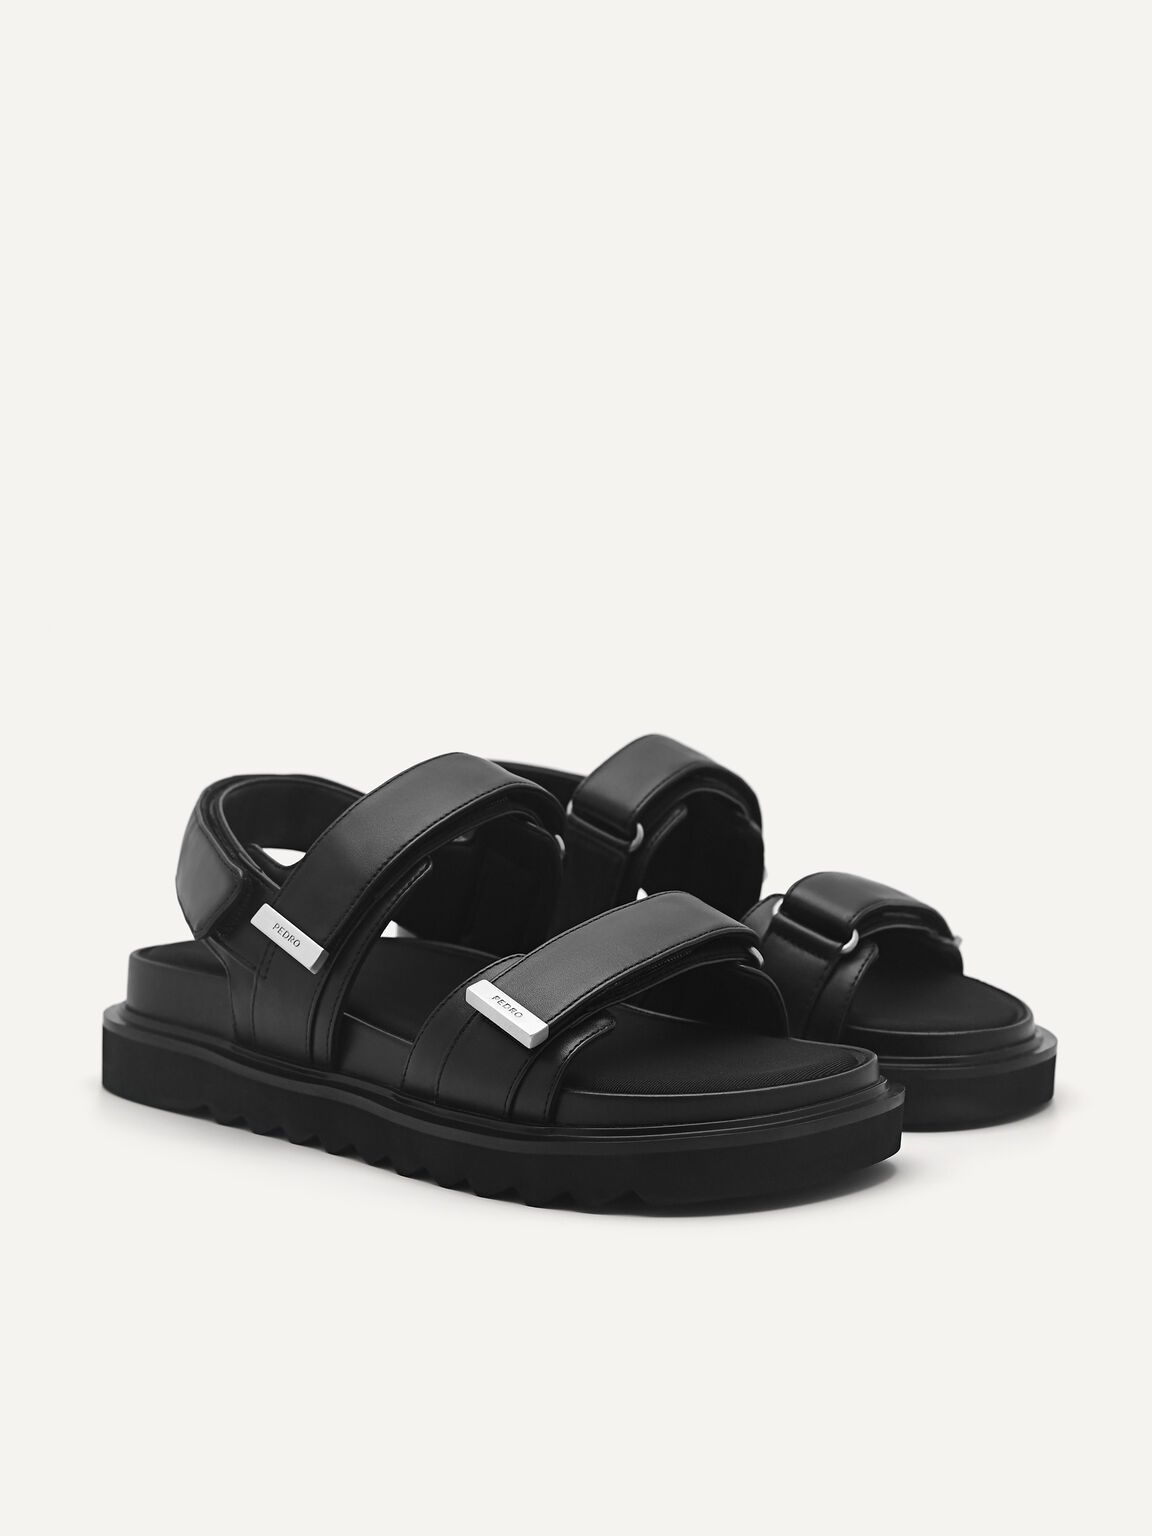 Aryna Slingback Sandals, Black, hi-res